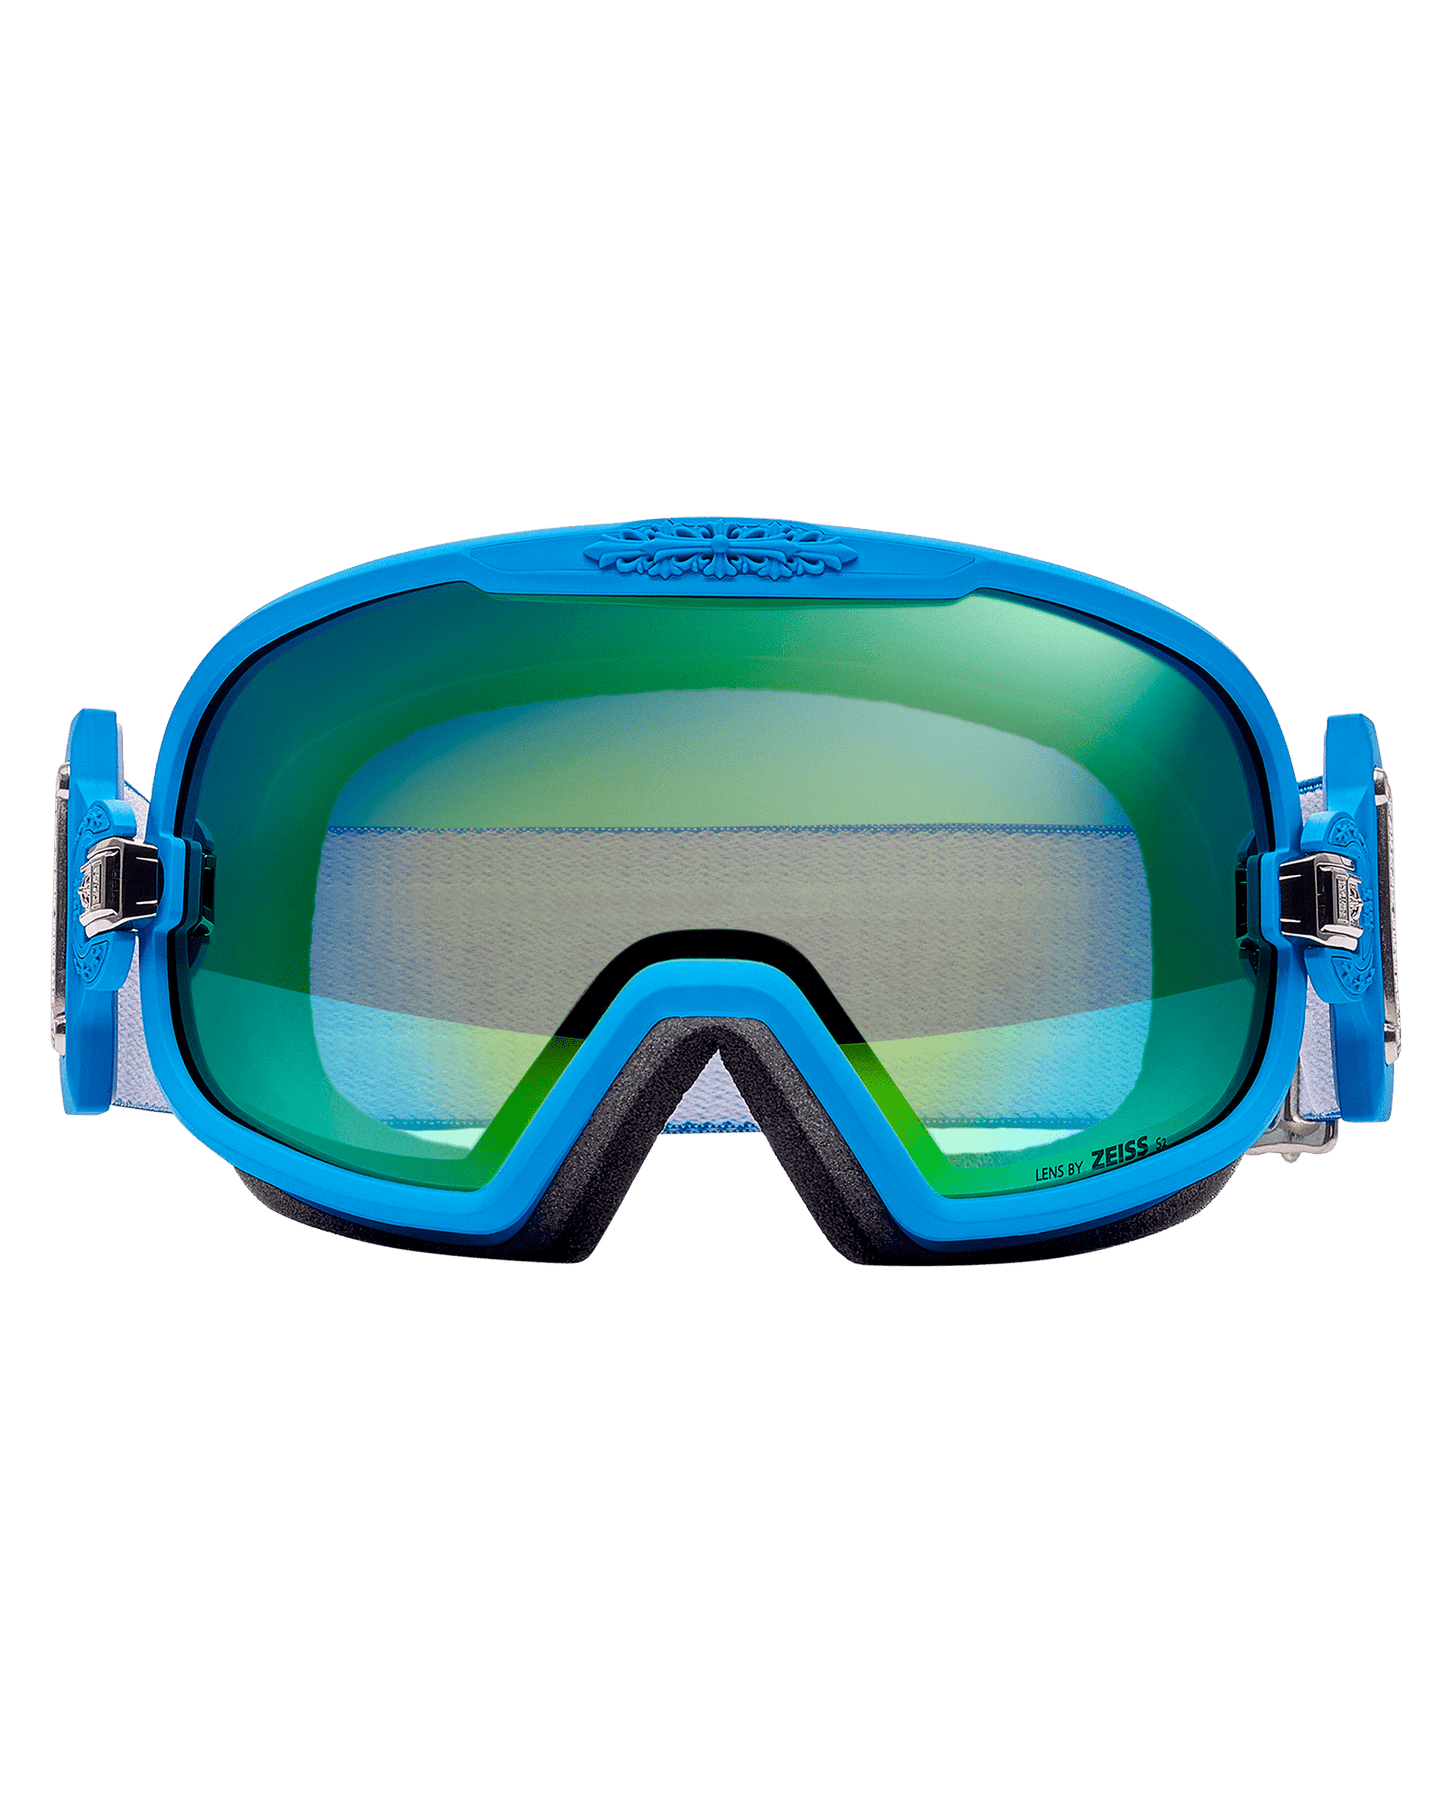 Chrome Hearts Snow Ski Goggles Silver Morning - Paroissesaintefoy Sneakers Sale Online